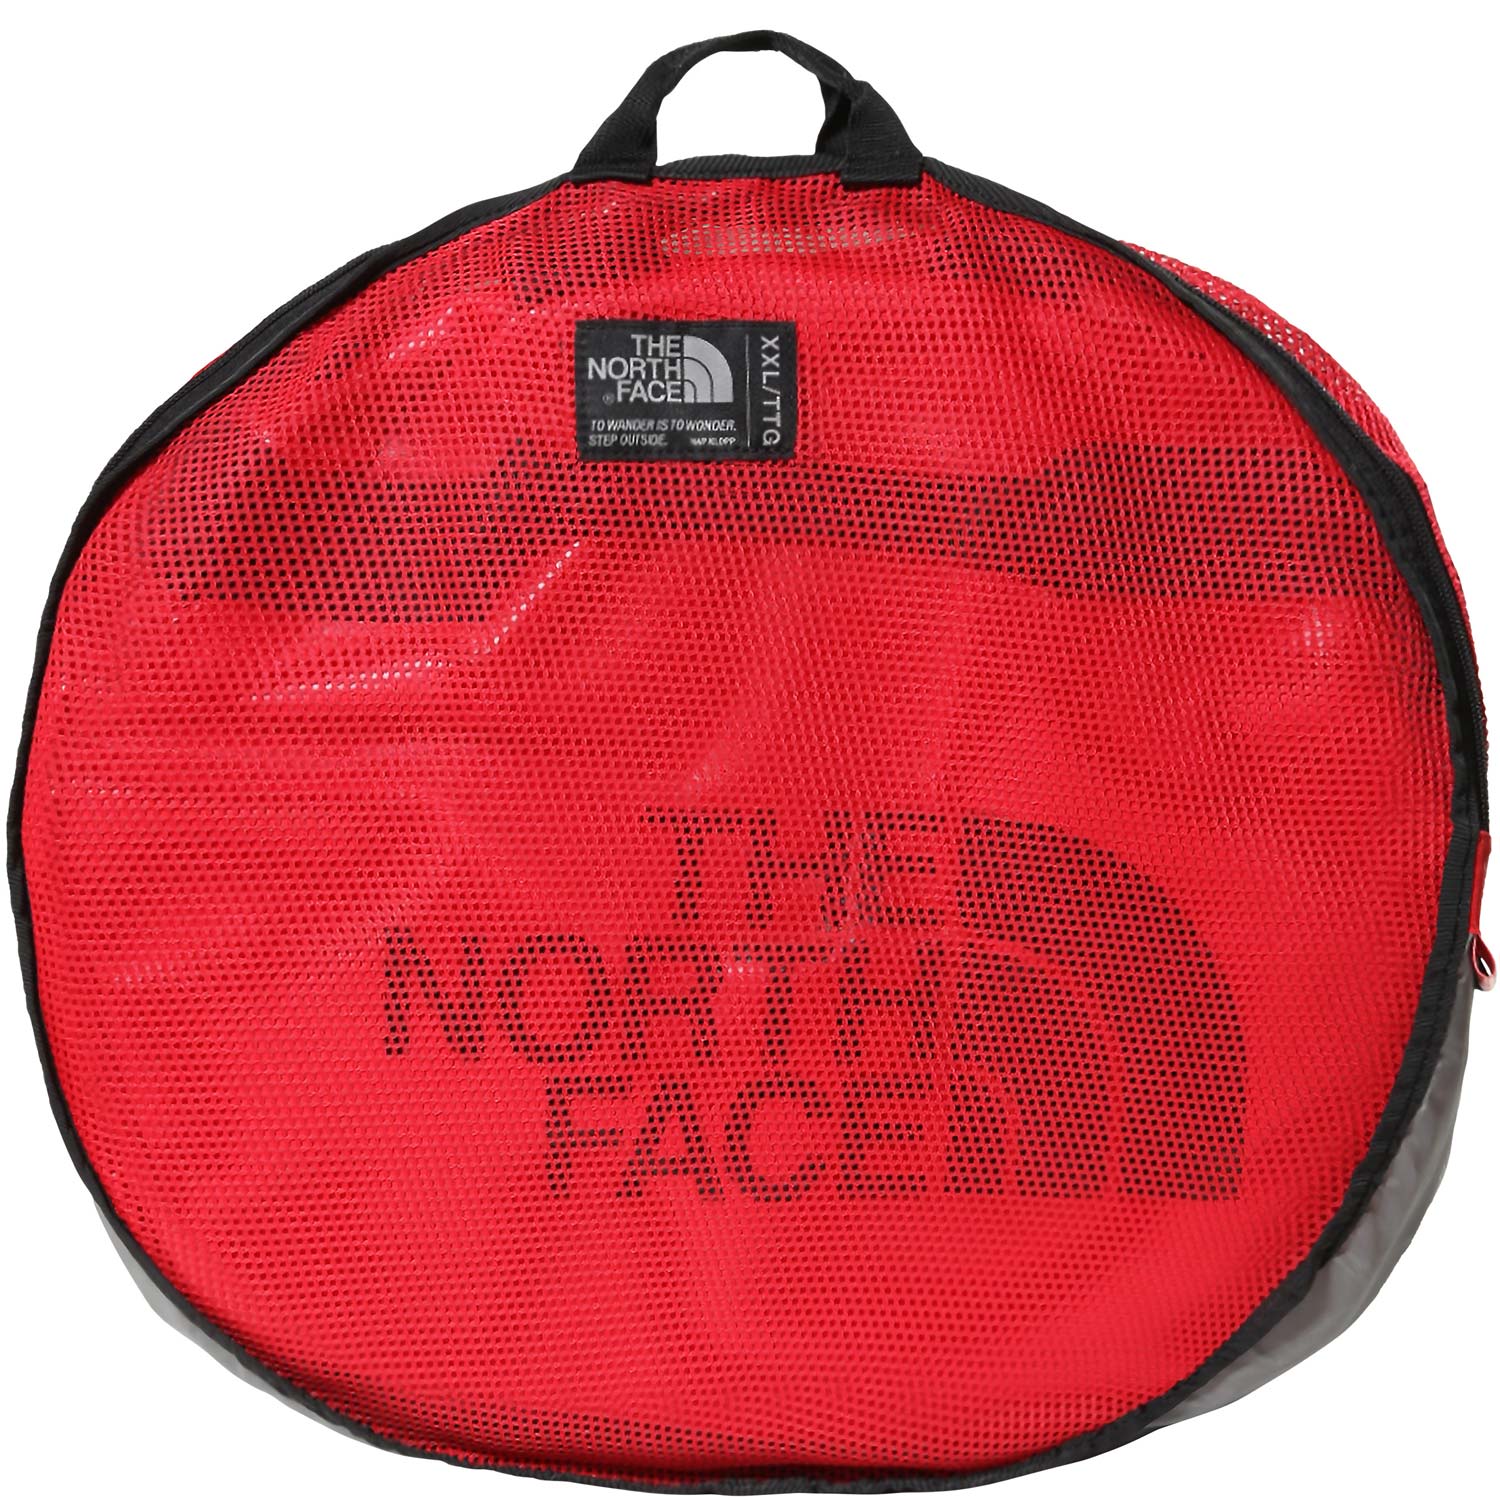 The North Face Reise/-Sporttasche Rucksack Base Camp Duffel XXL TNF Red-TNF Black